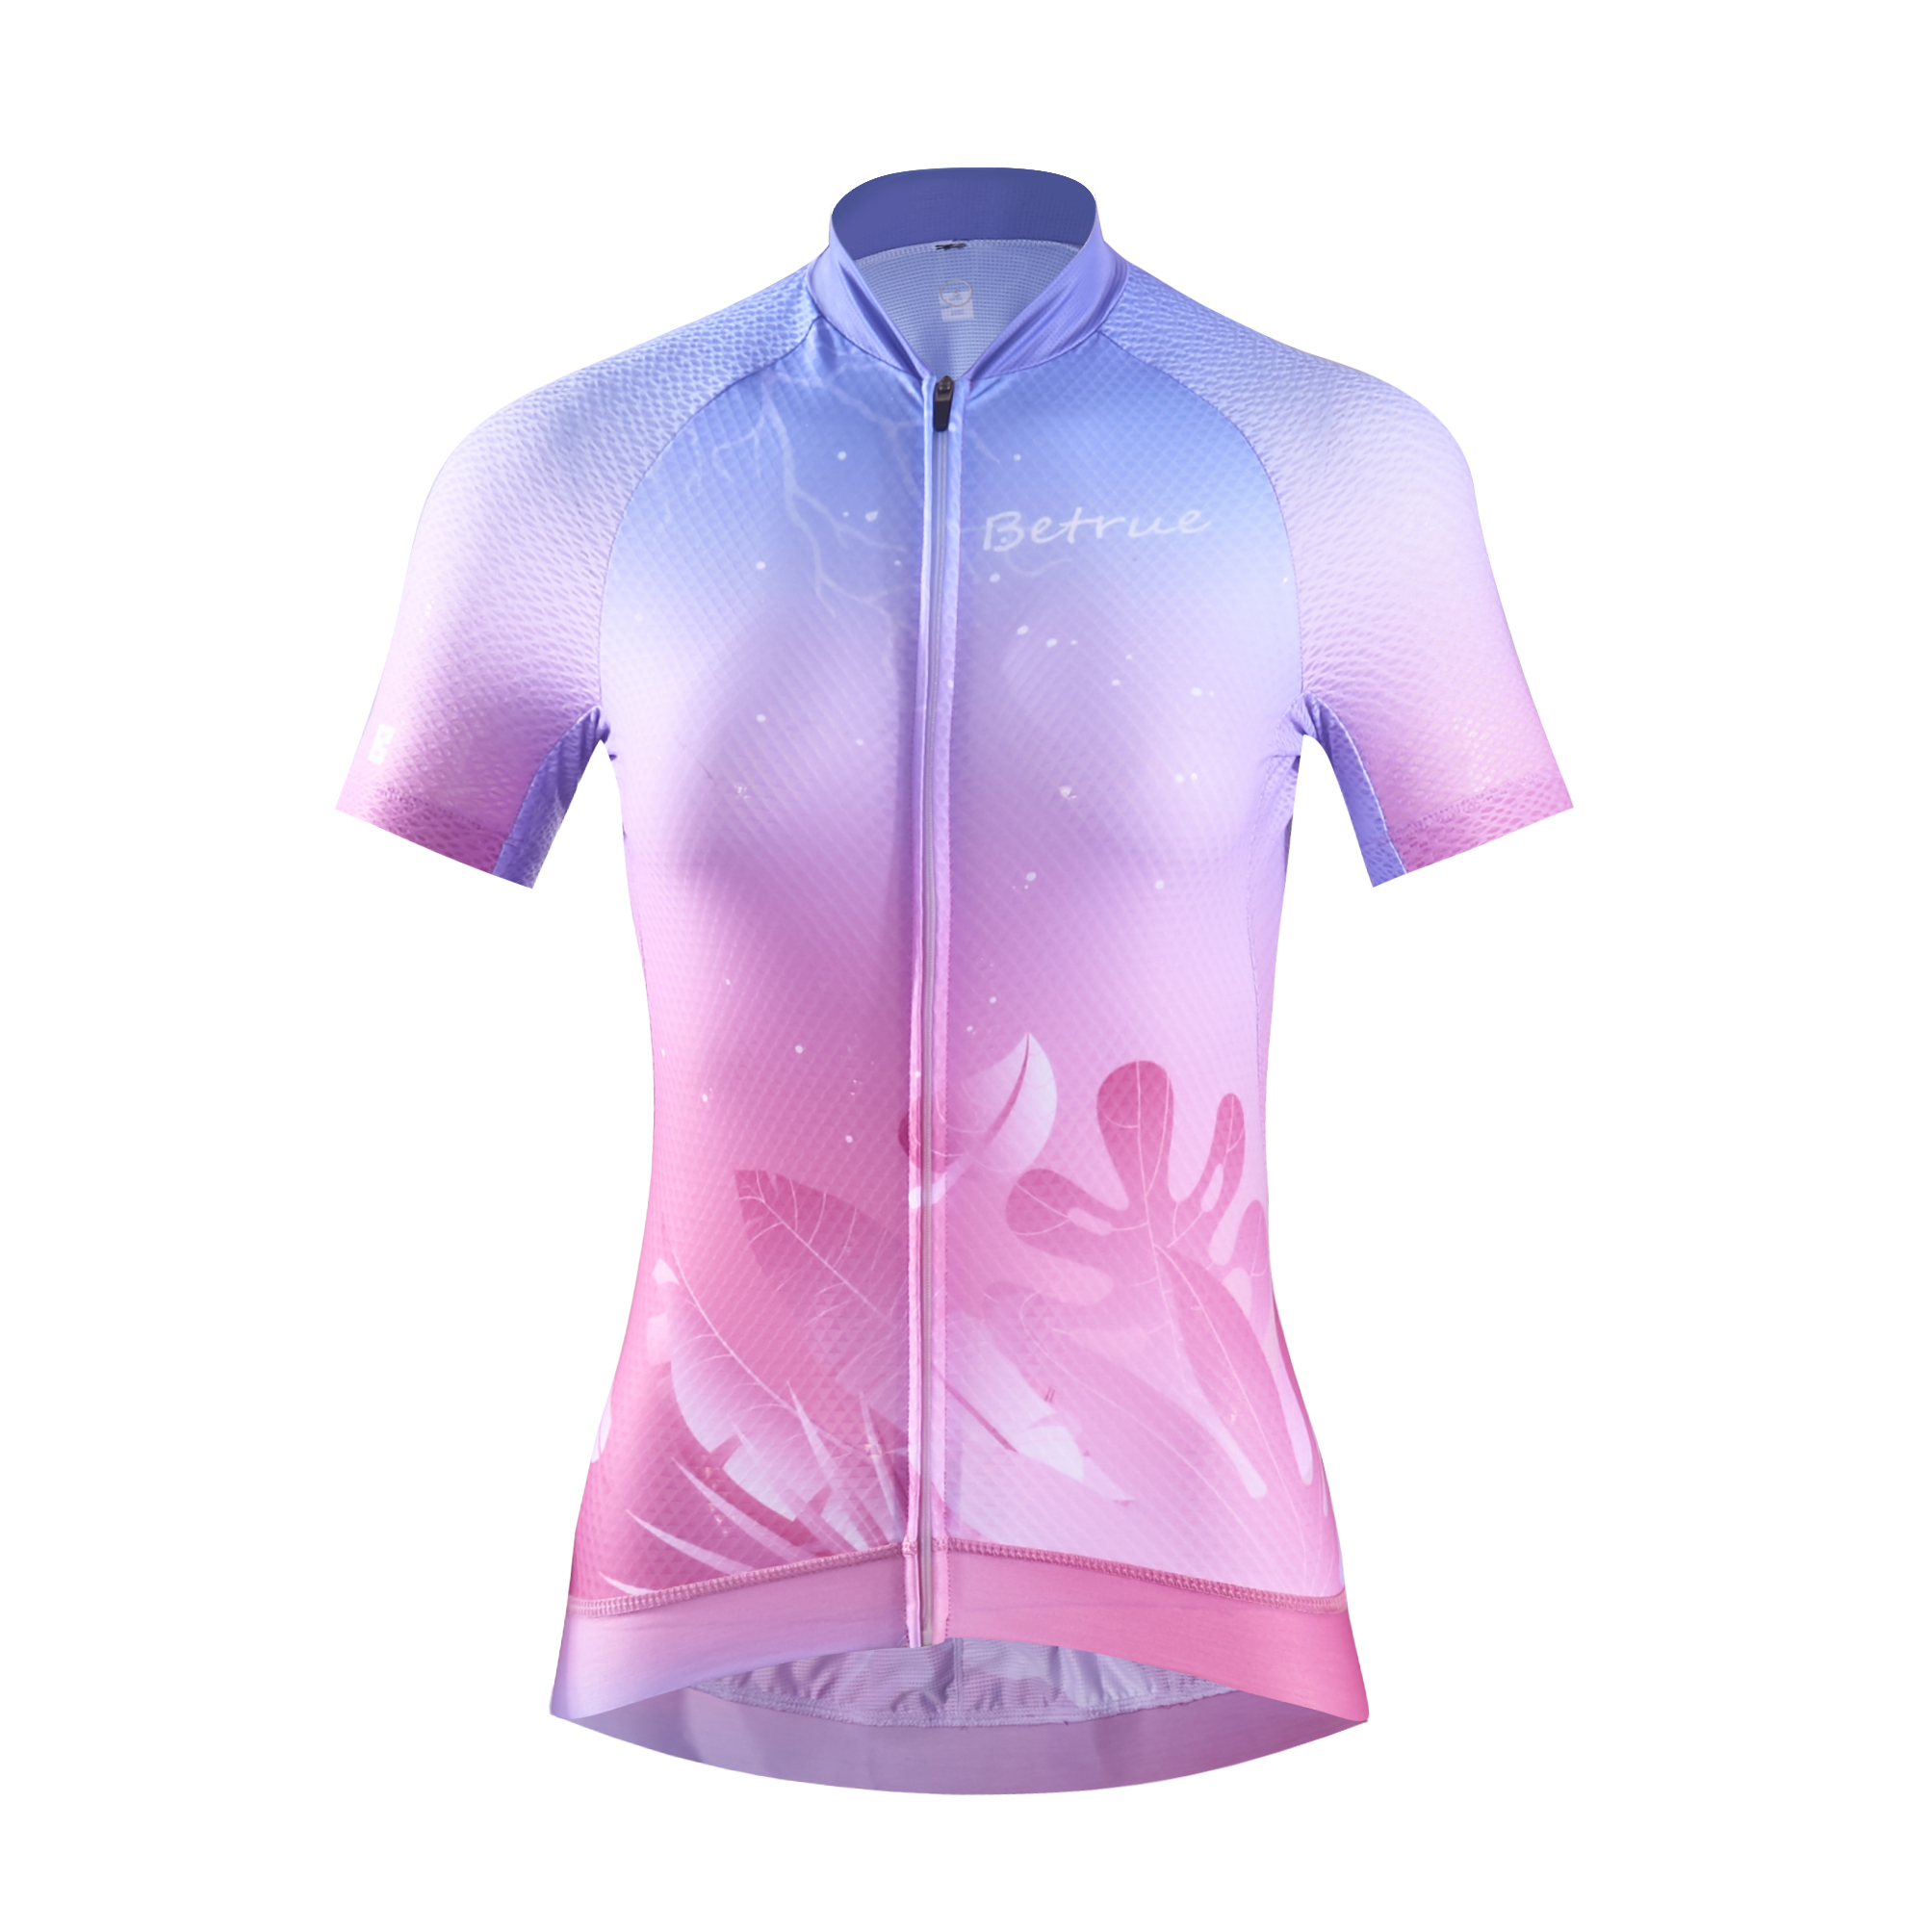 Camisas personalizadas femininas Ciclismo SJ008W (2)